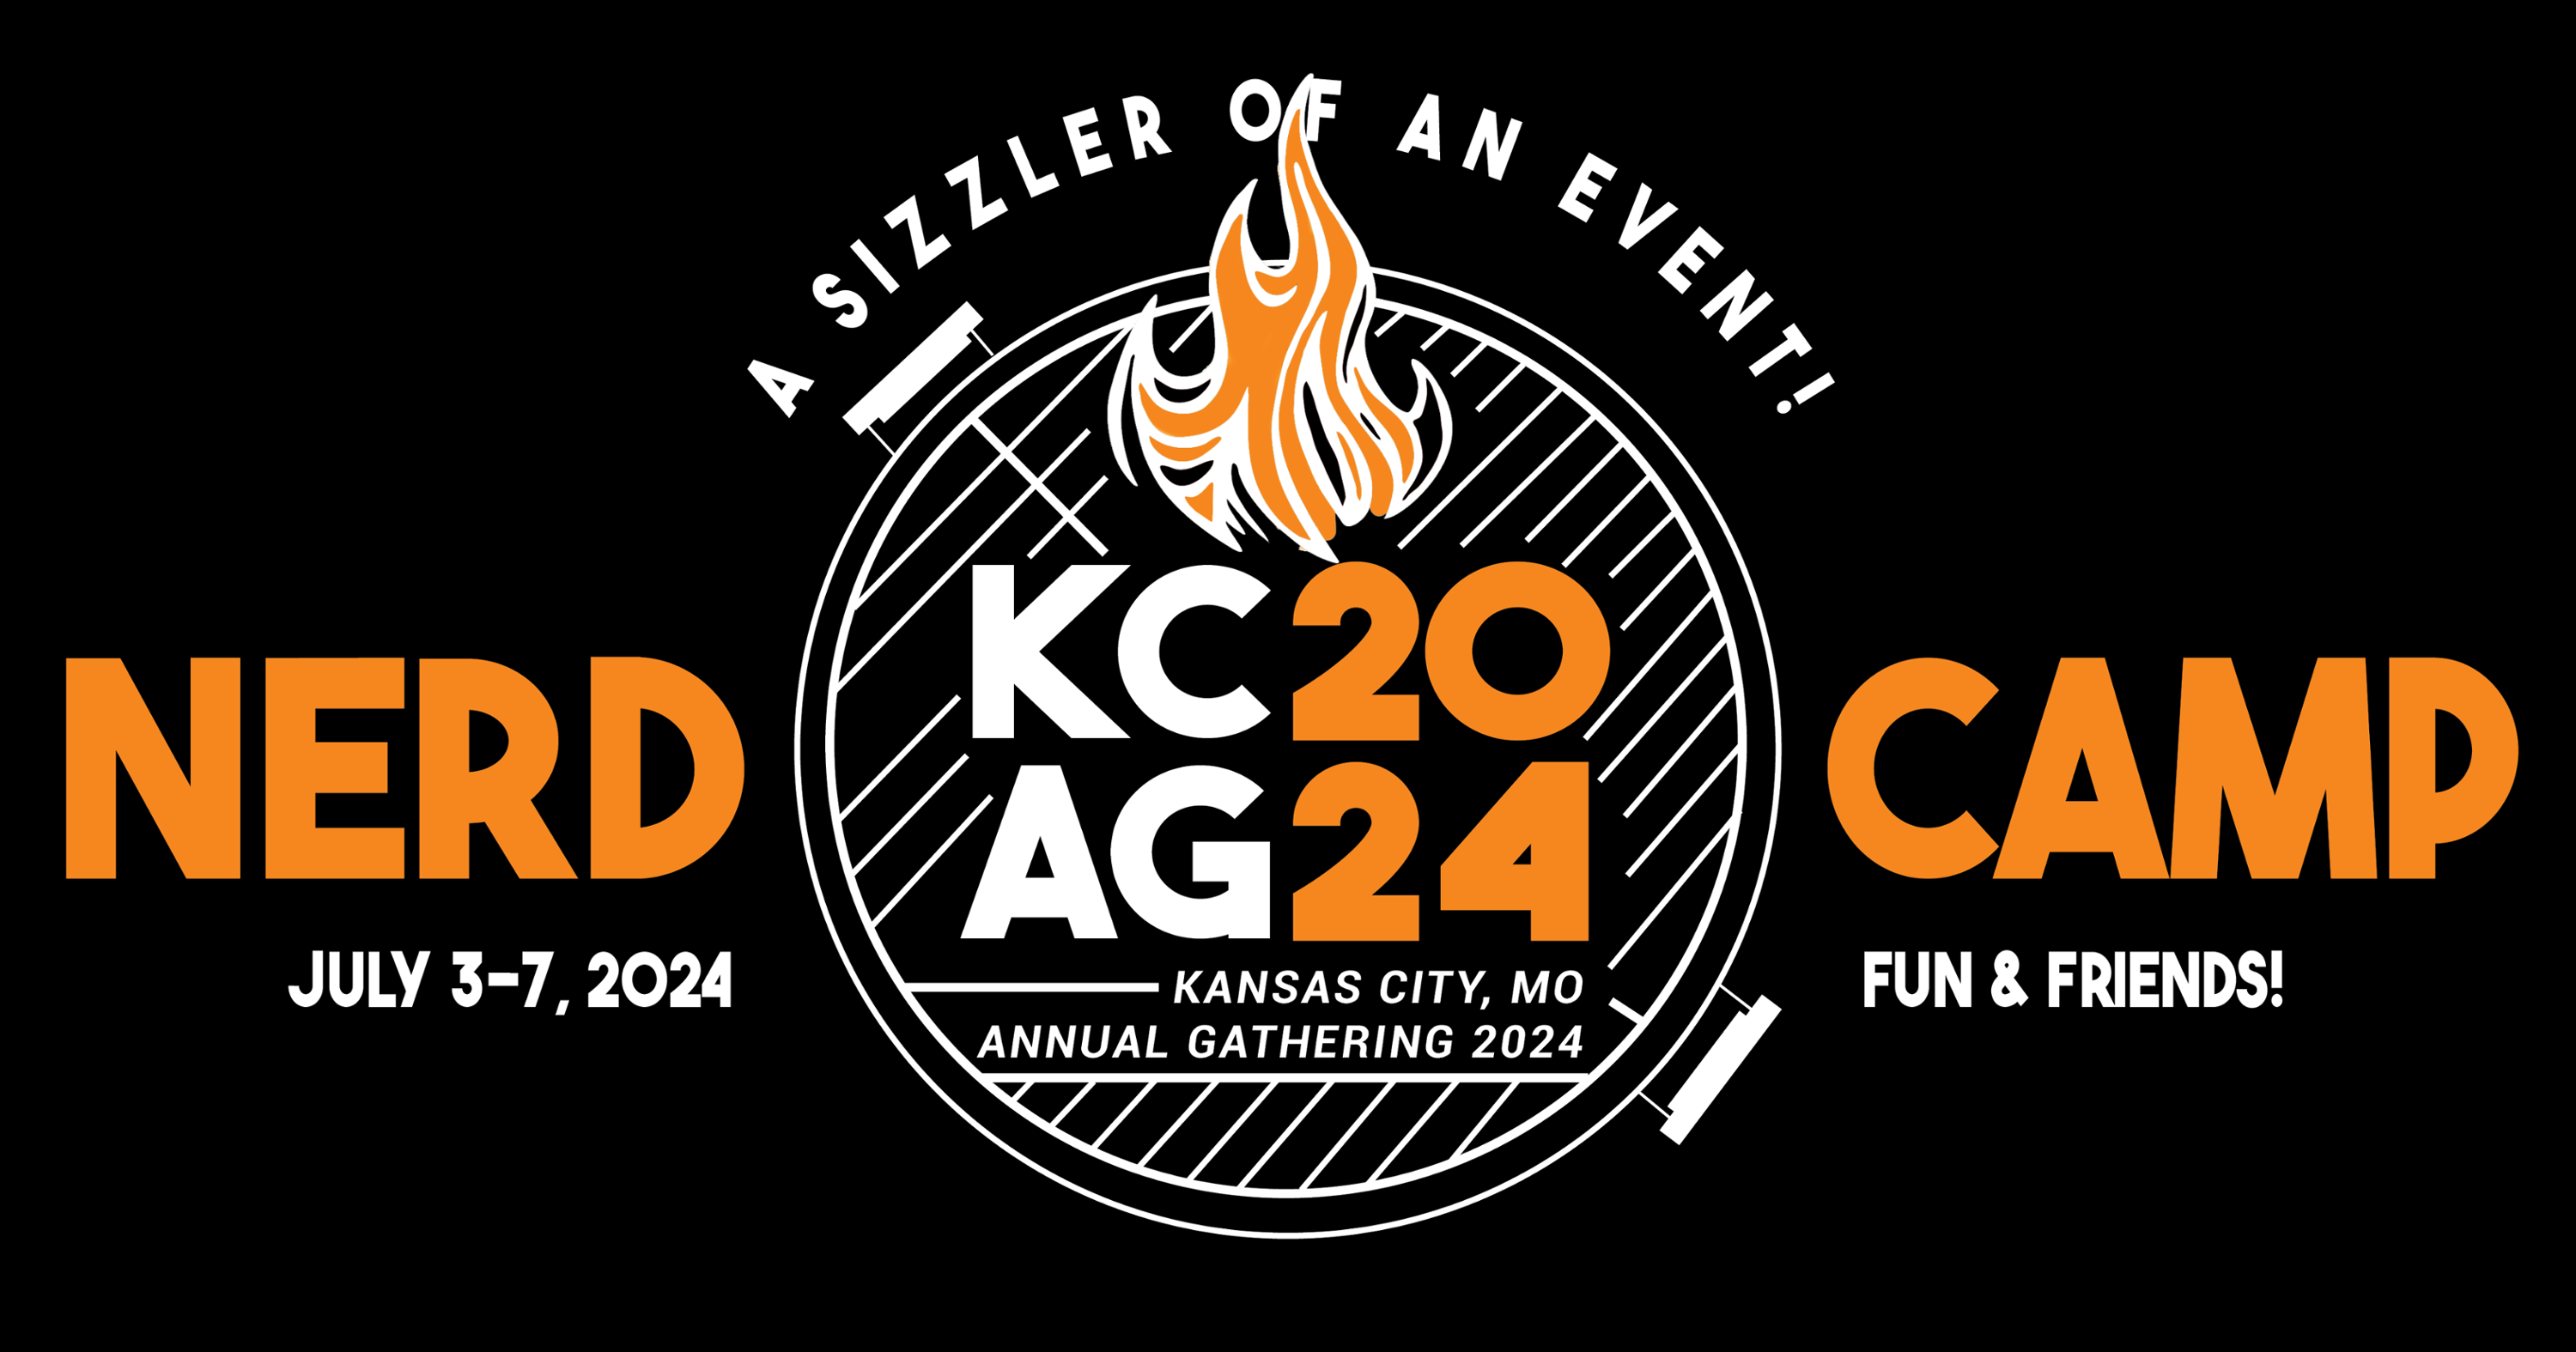 Annual Gathering logo